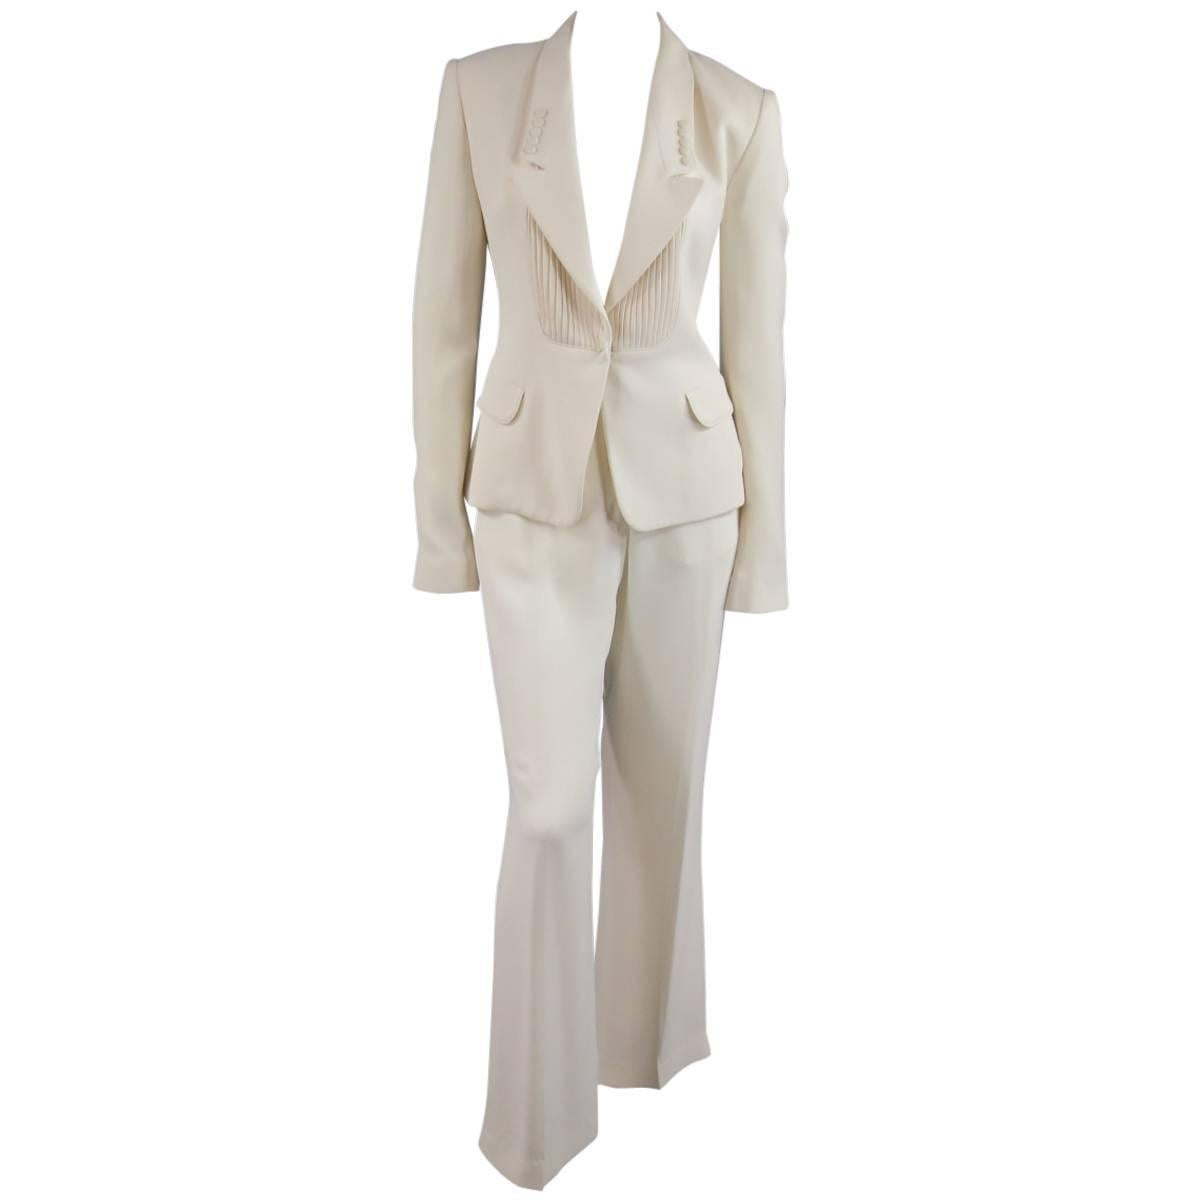 VIKTOR & ROLF Size 6 Off White Silk Tuxedo Style Pleated Bib Pants Suit